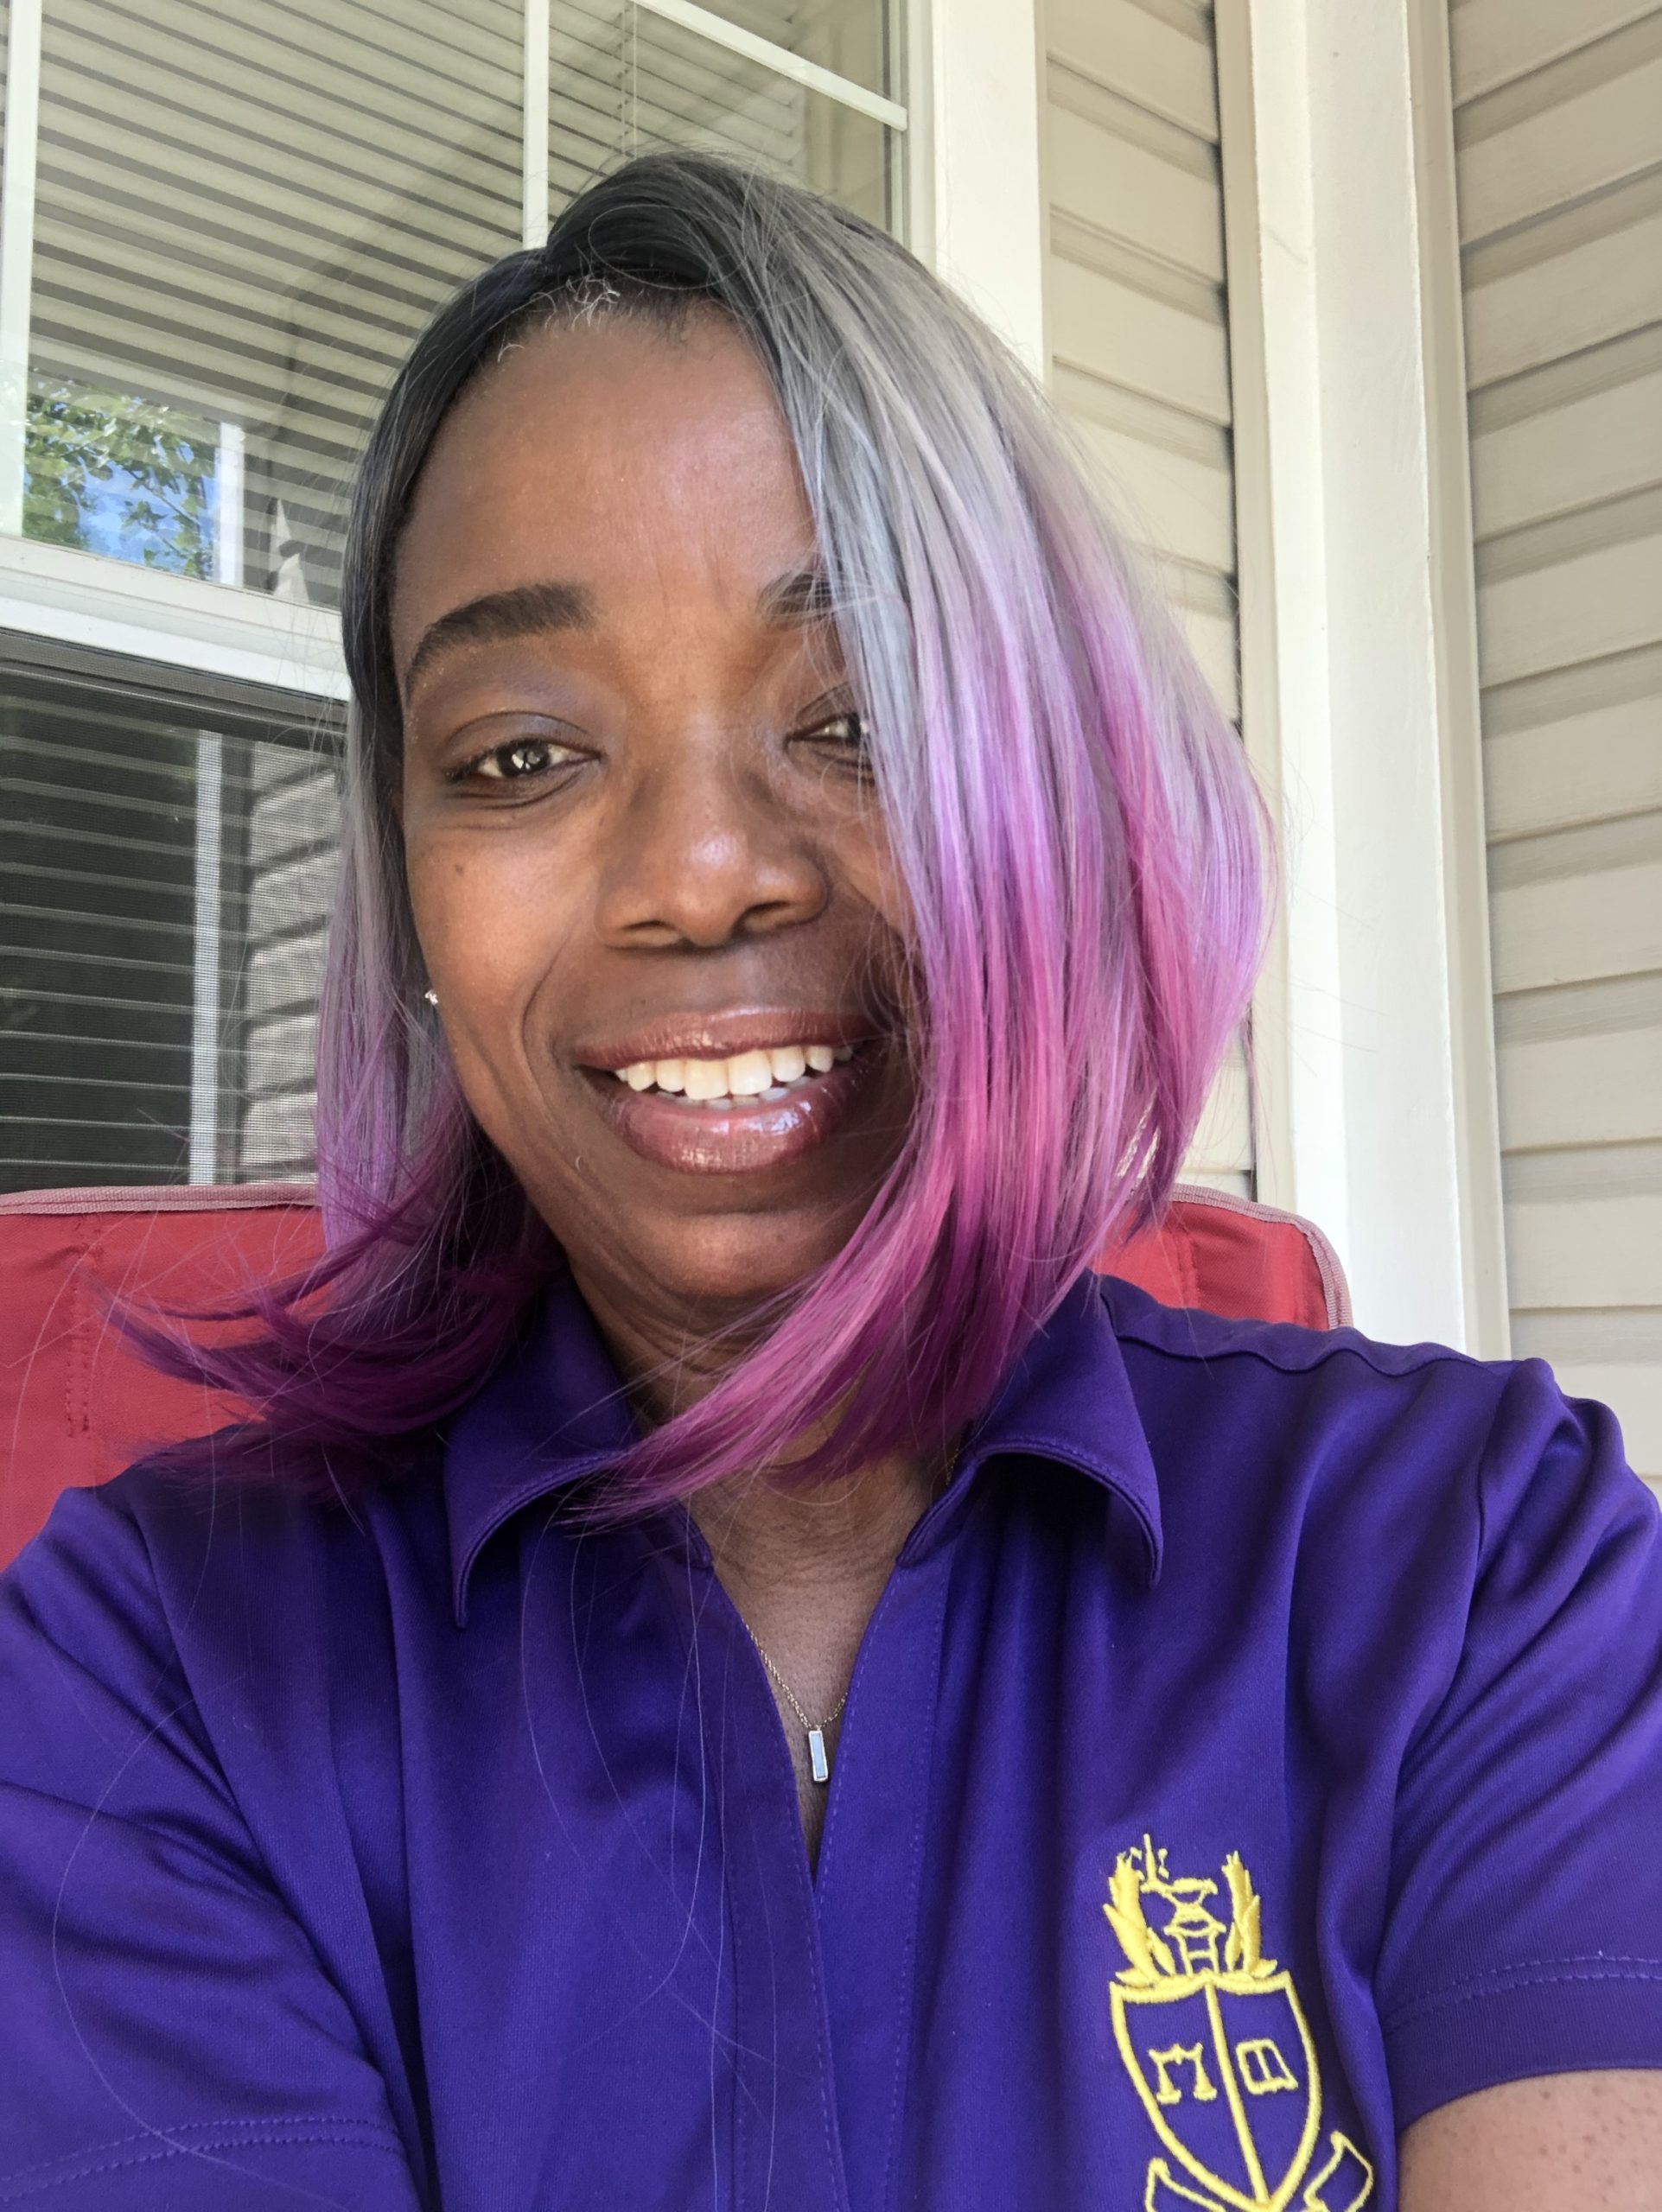 Image of Monique K. in purple wig